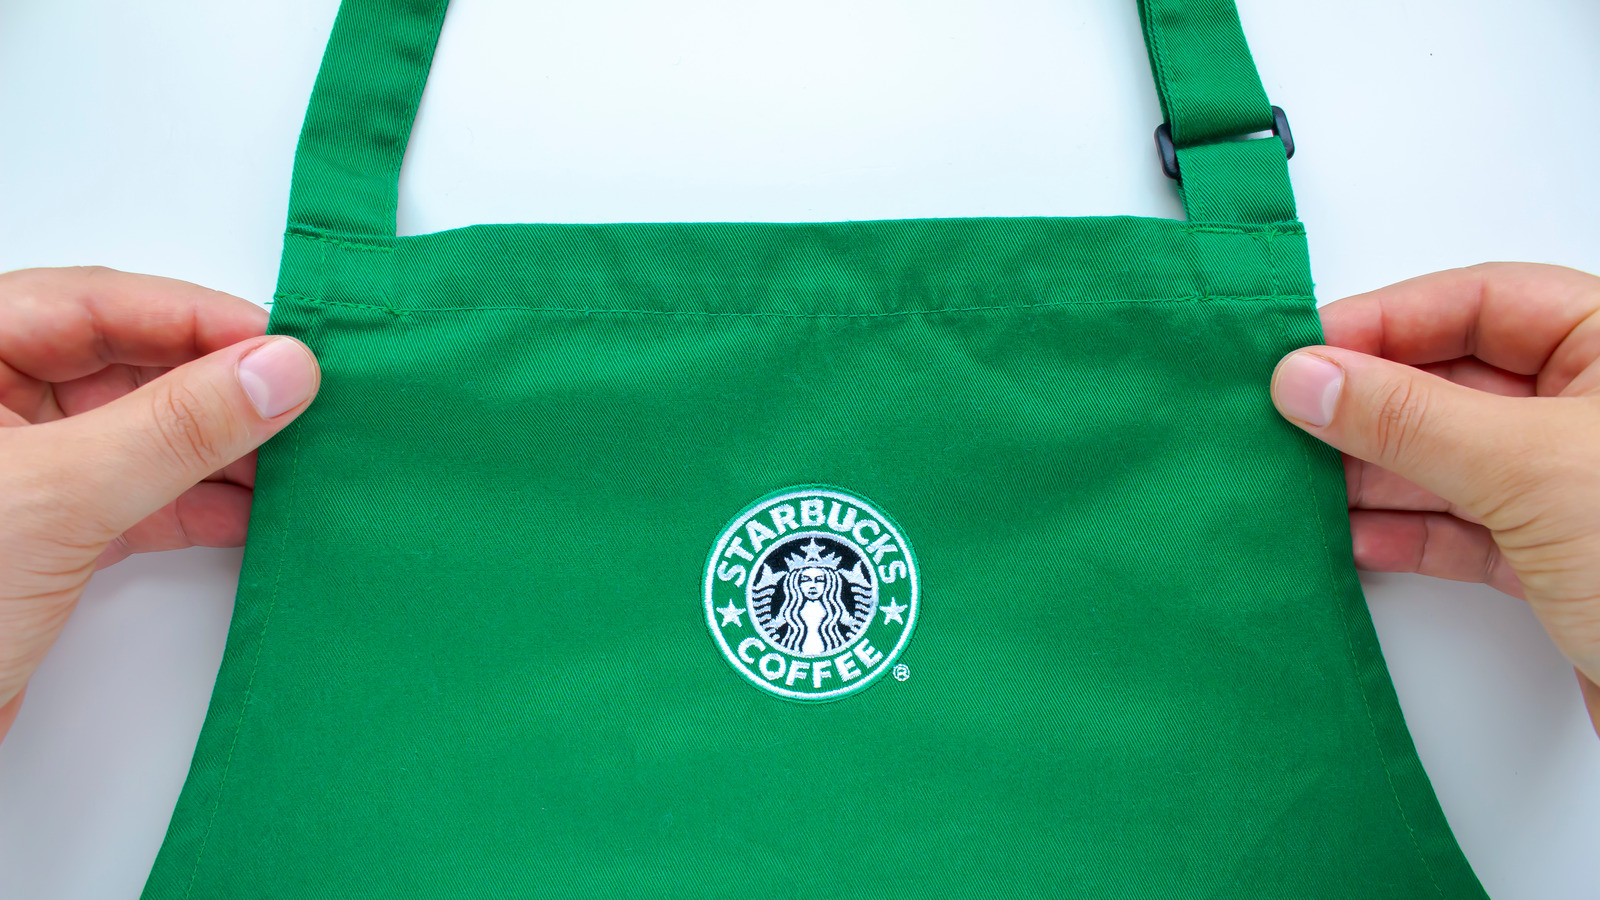 Uplifting new Starbucks merch collaboration honors Latin American culture -  Starbucks Stories